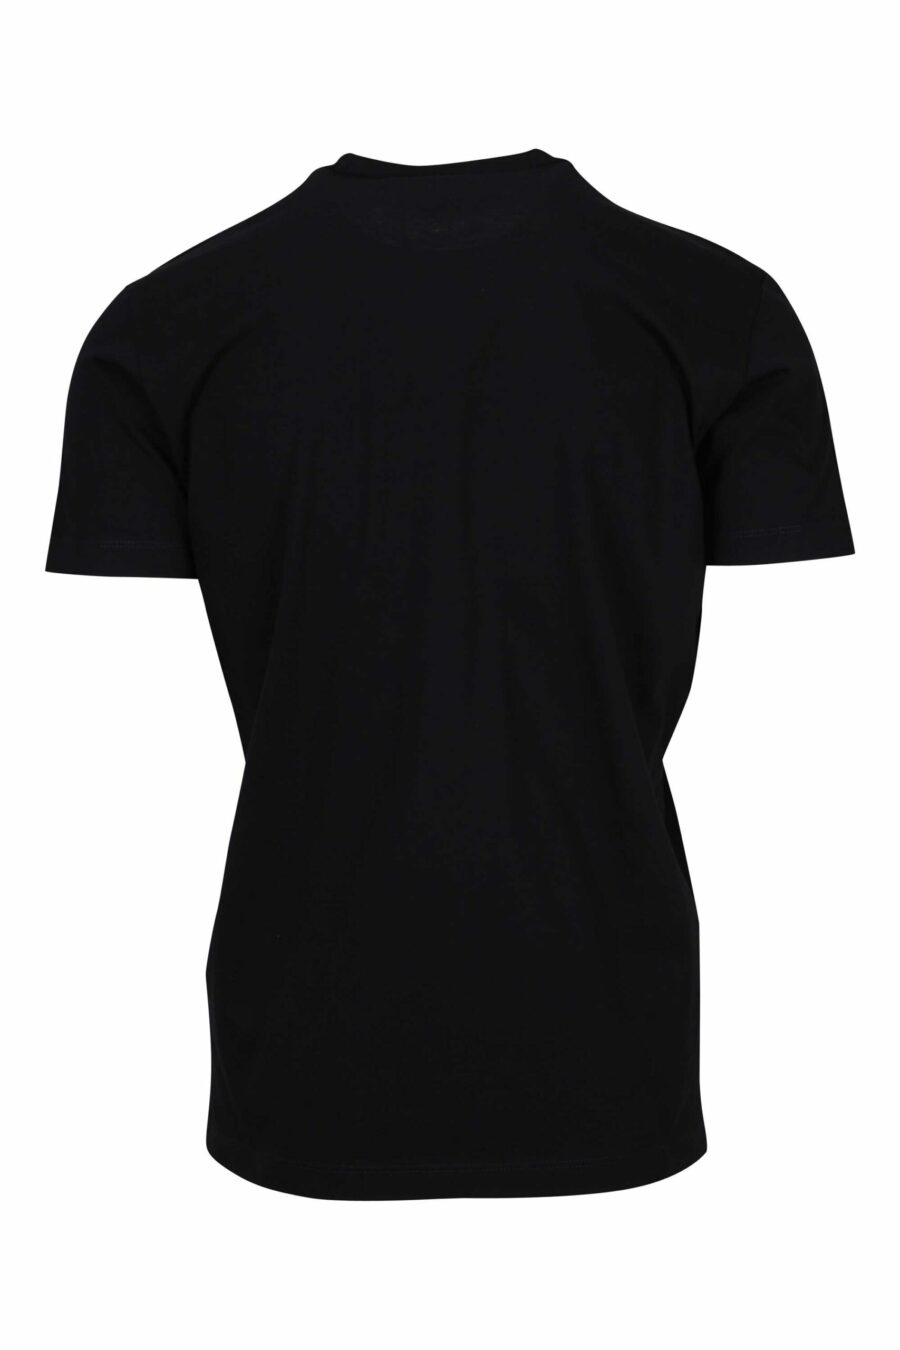 Camiseta negra con maxilogo "D2" bandera - 8054148332518 1 scaled